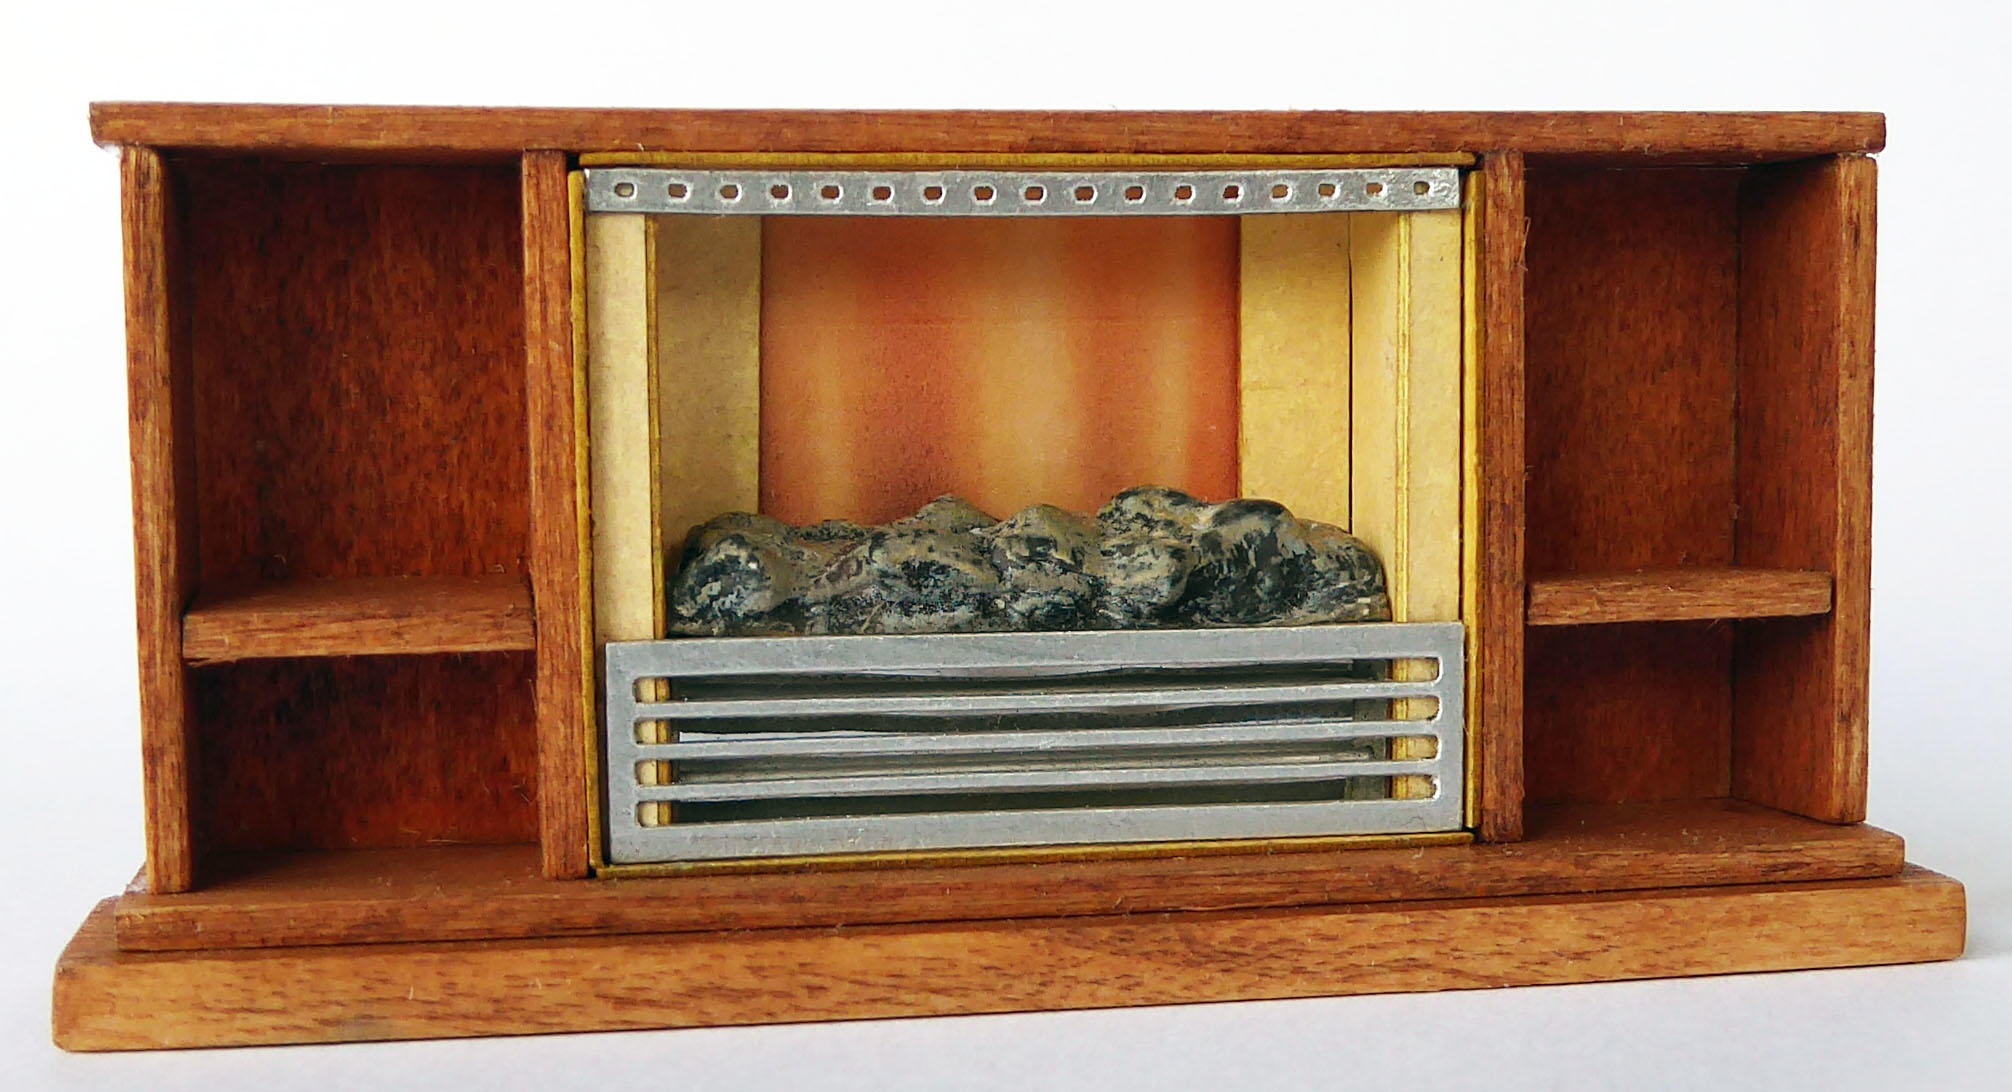 1/48th scale 70s Retro Miniature Coal Effect Fire Kit